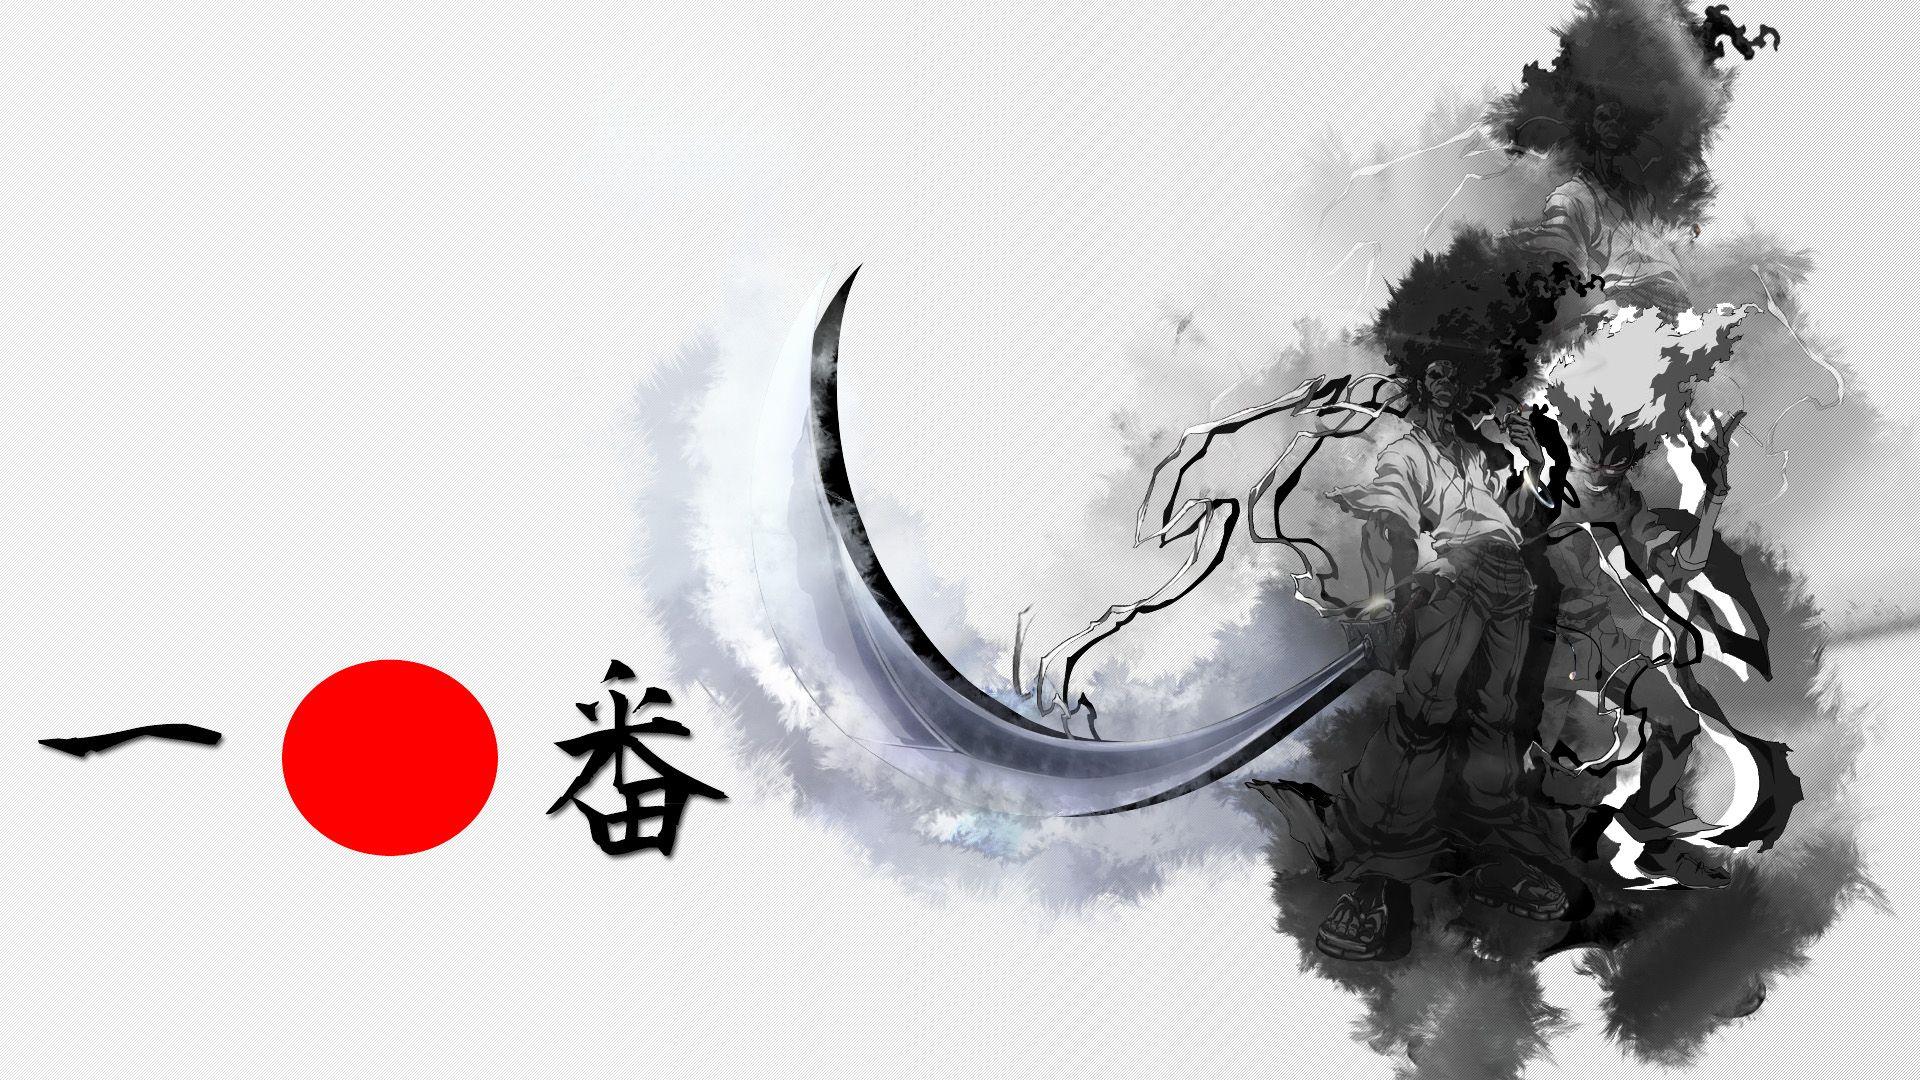 Wallpaper.wiki Afro Samurai Anime Wallpaper PIC WPC002269